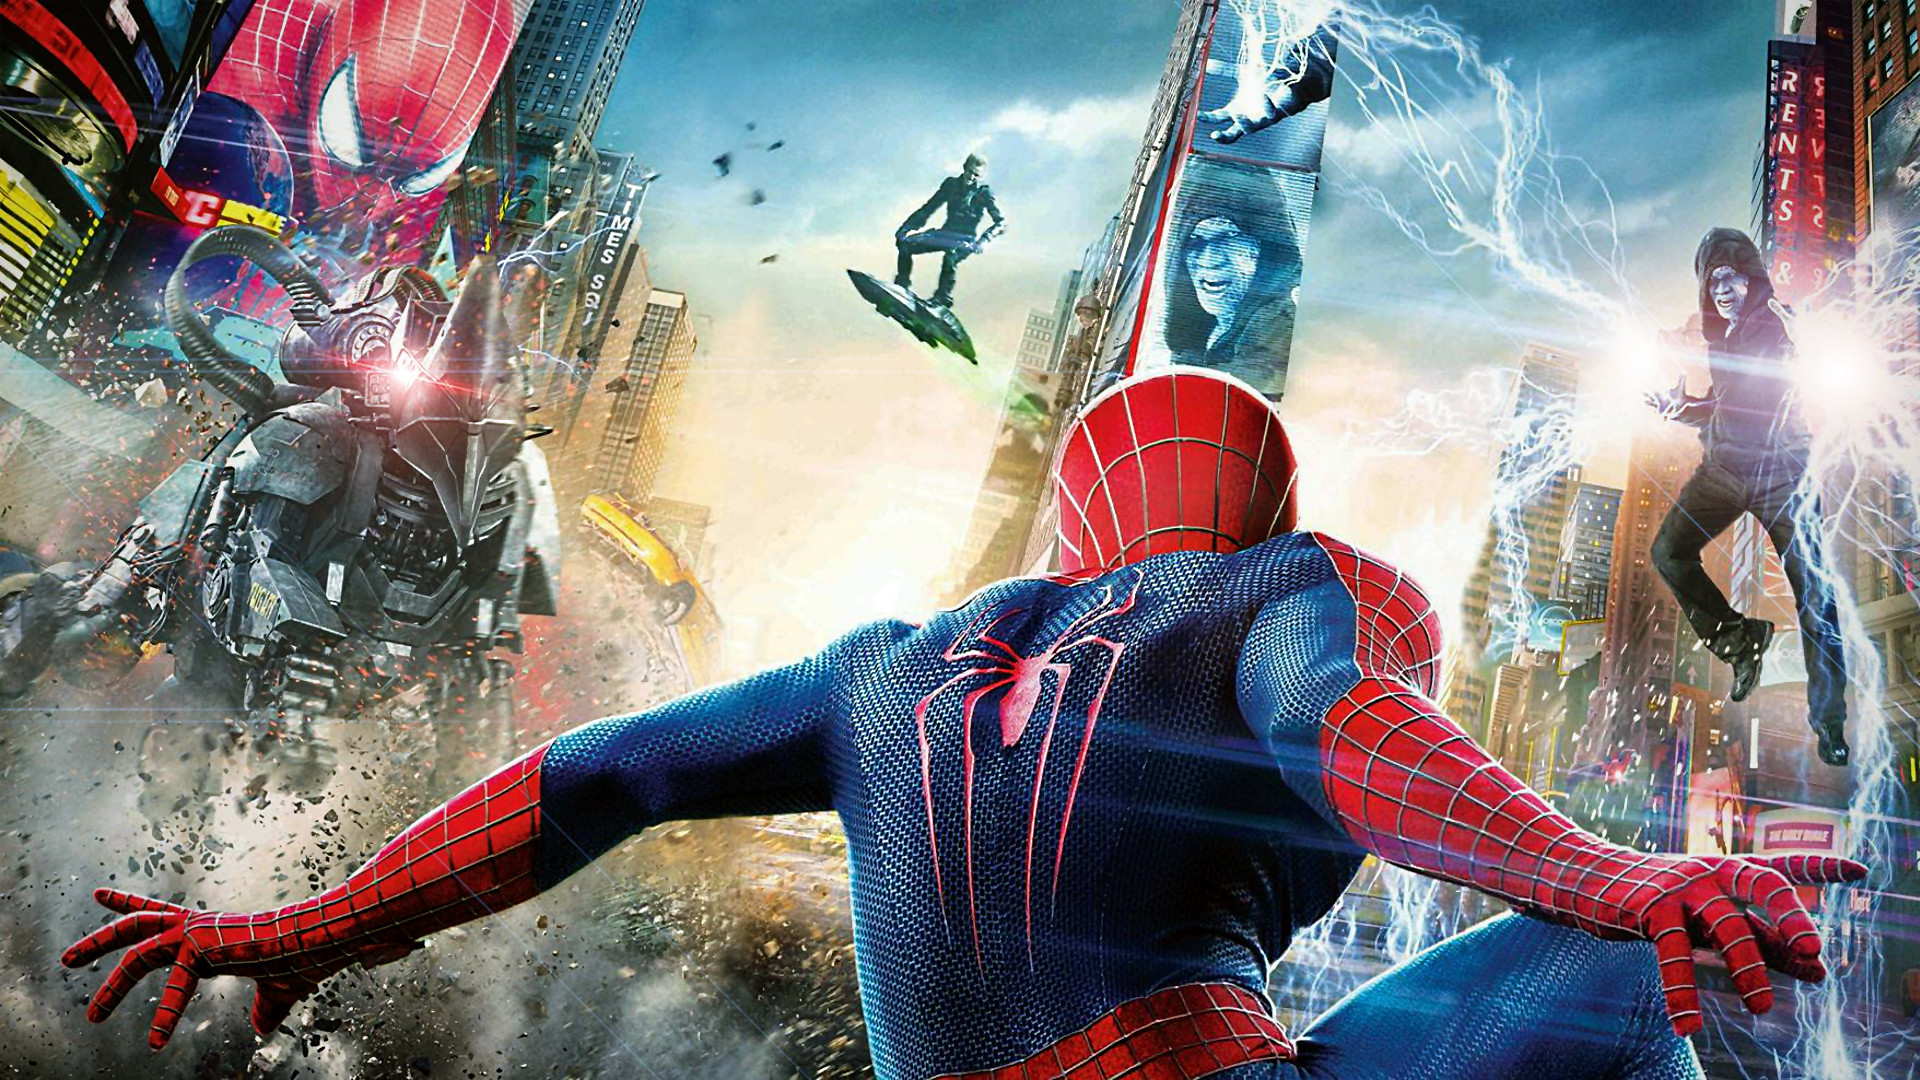 1920x1080 ... The Amazing Spider-Man 2 Movie Poster Wallpaper #2 by ProfessorAdagio